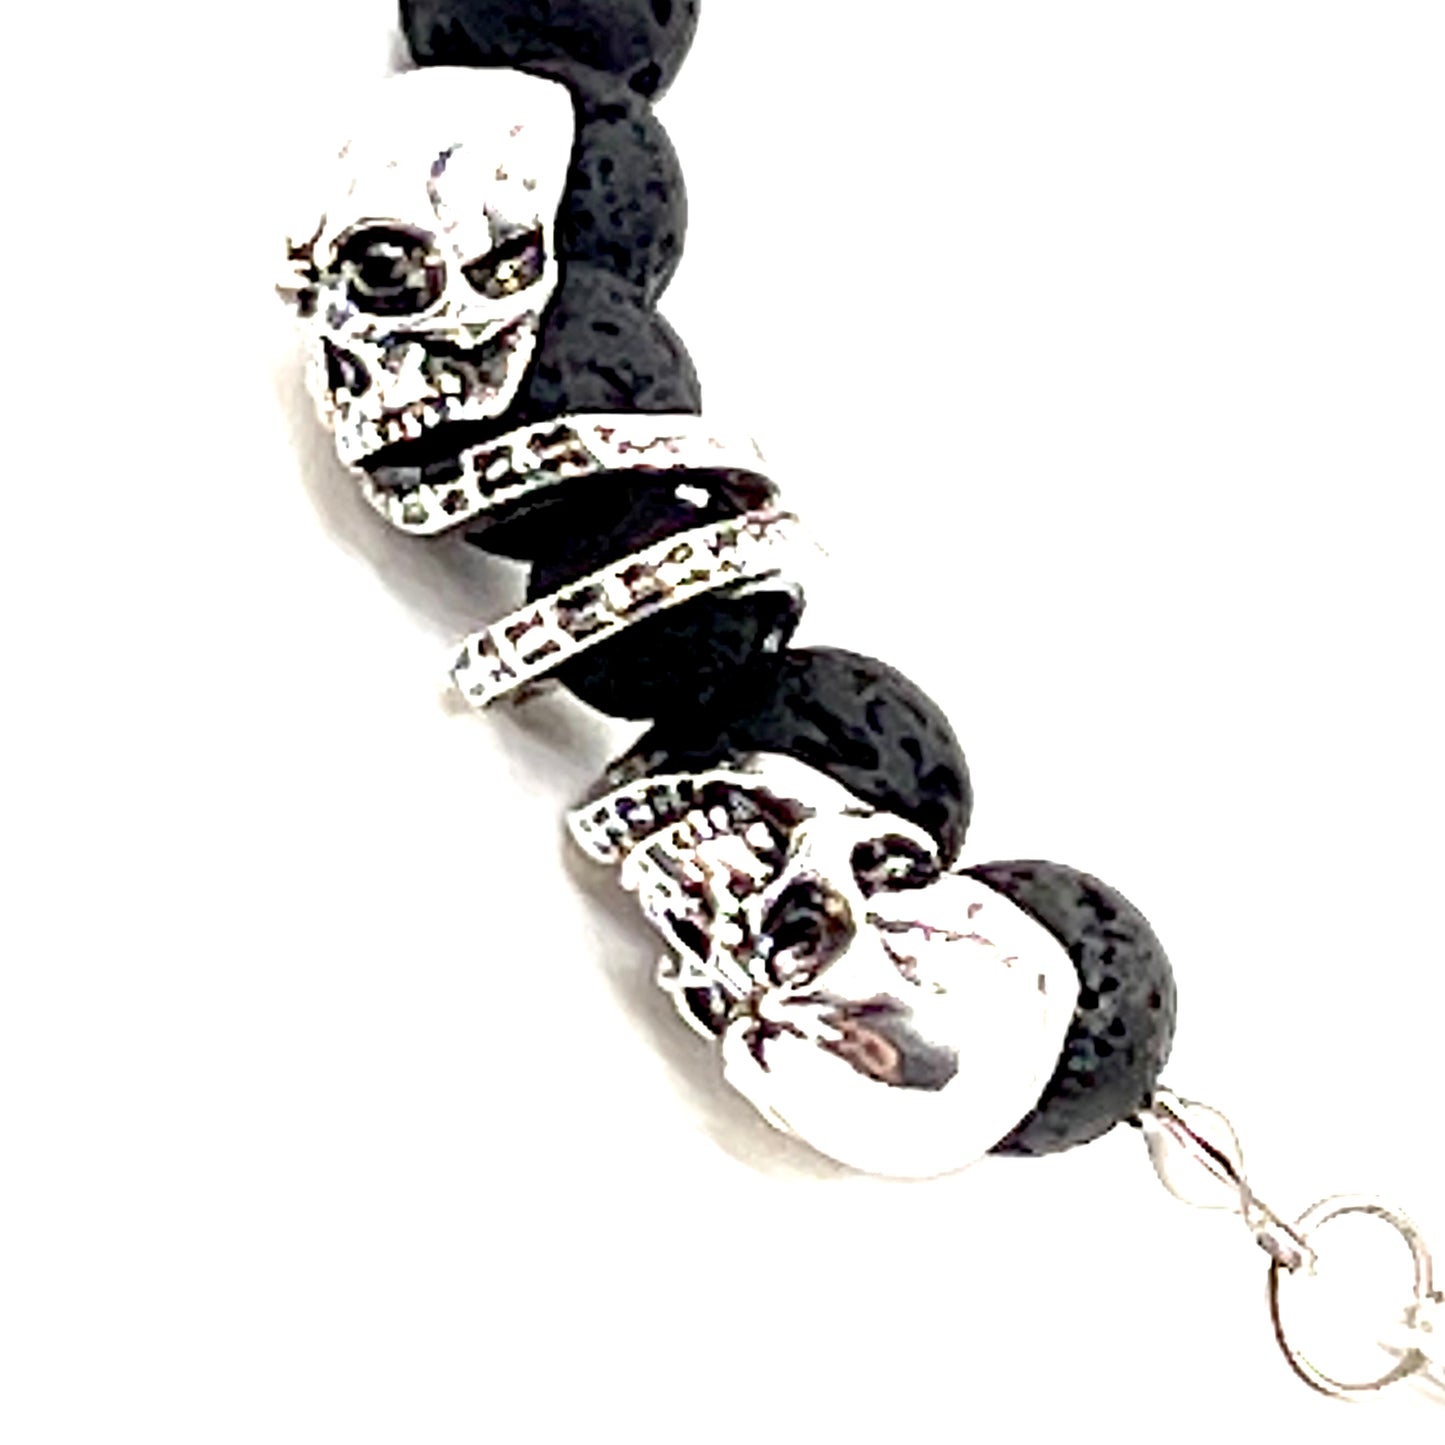 Bracelet with skulls